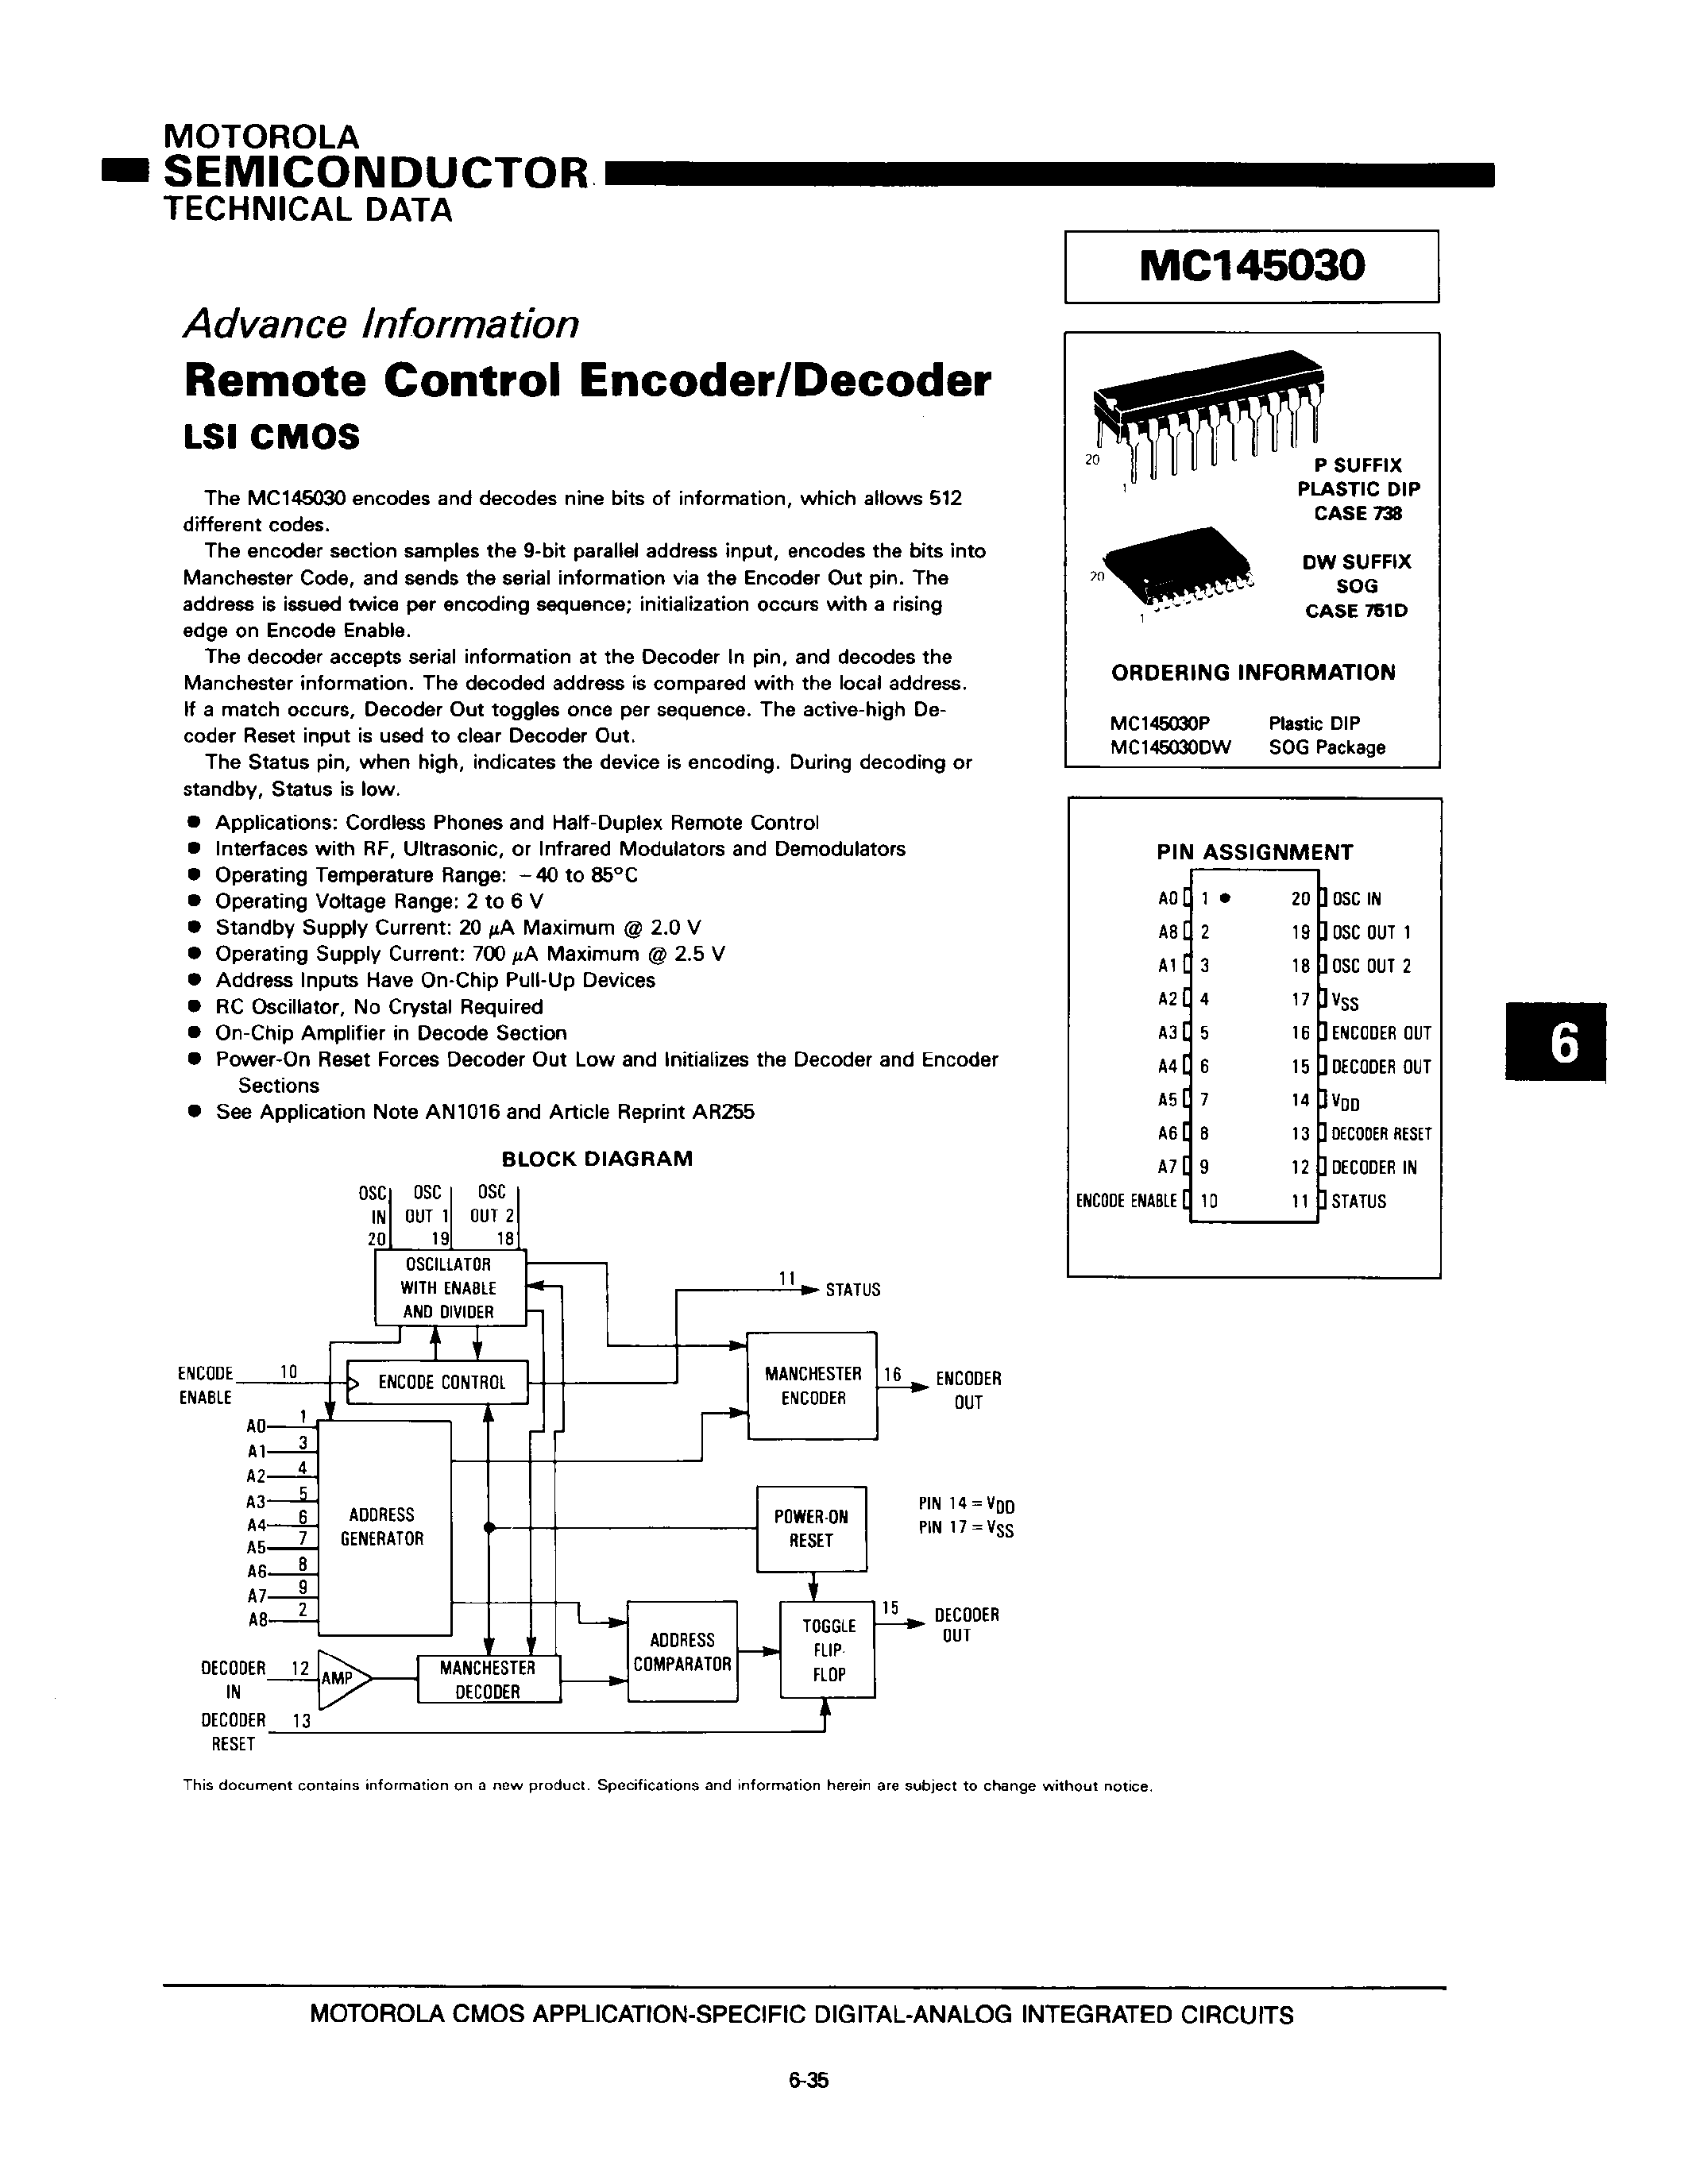 Datasheet MC145030DW - Remote Control Encoder/Decoder LSI CMOS page 1